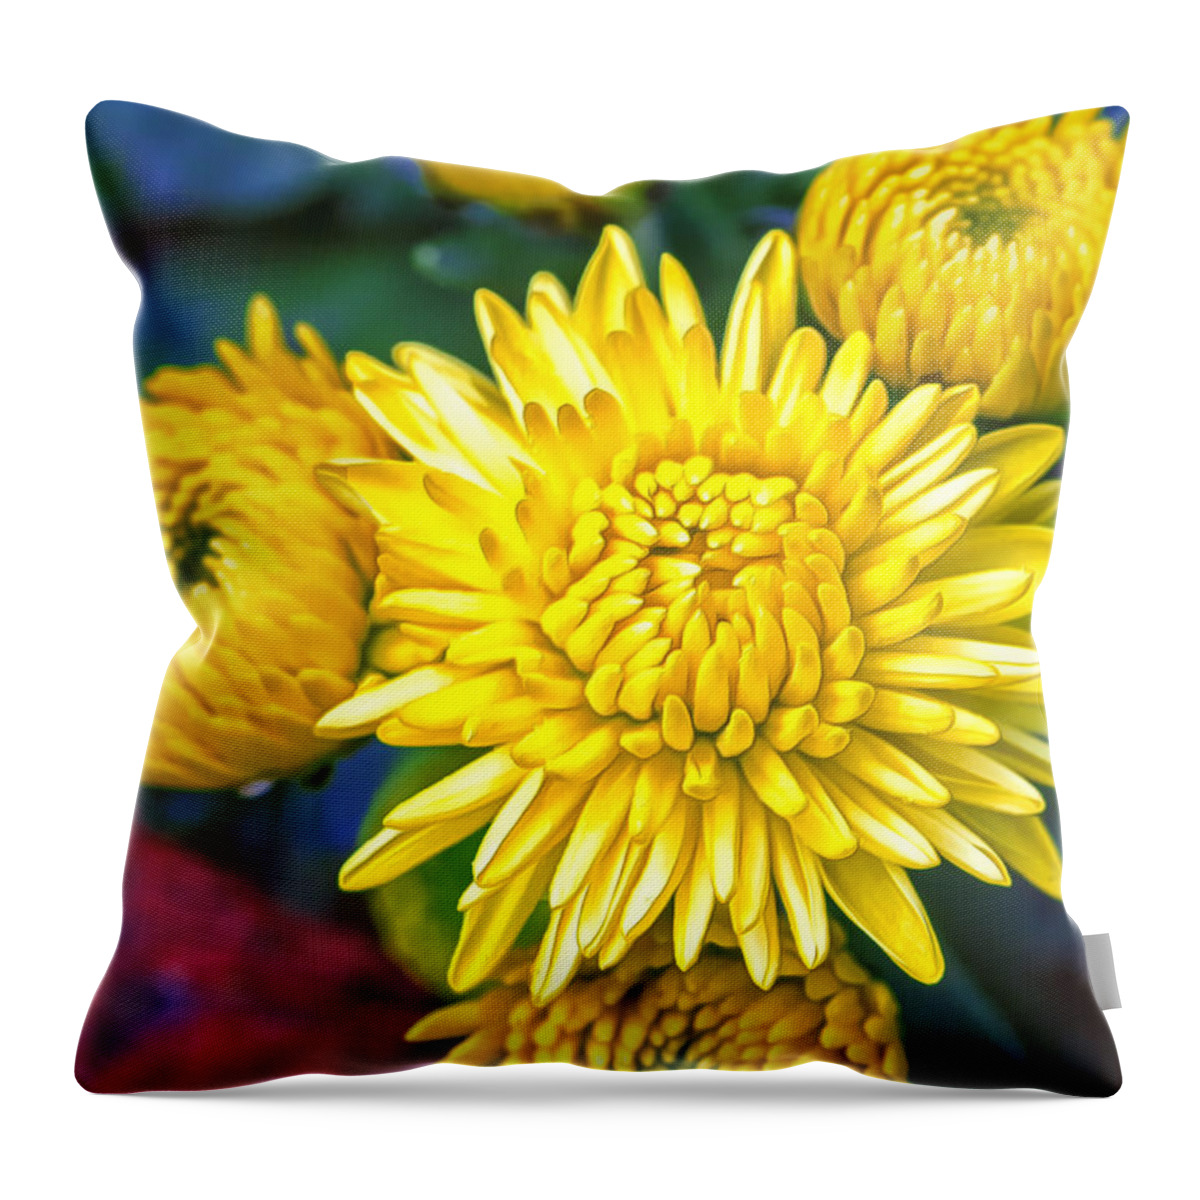 Flower Throw Pillow featuring the photograph Aurulent Flavicomous Petals by Bill and Linda Tiepelman